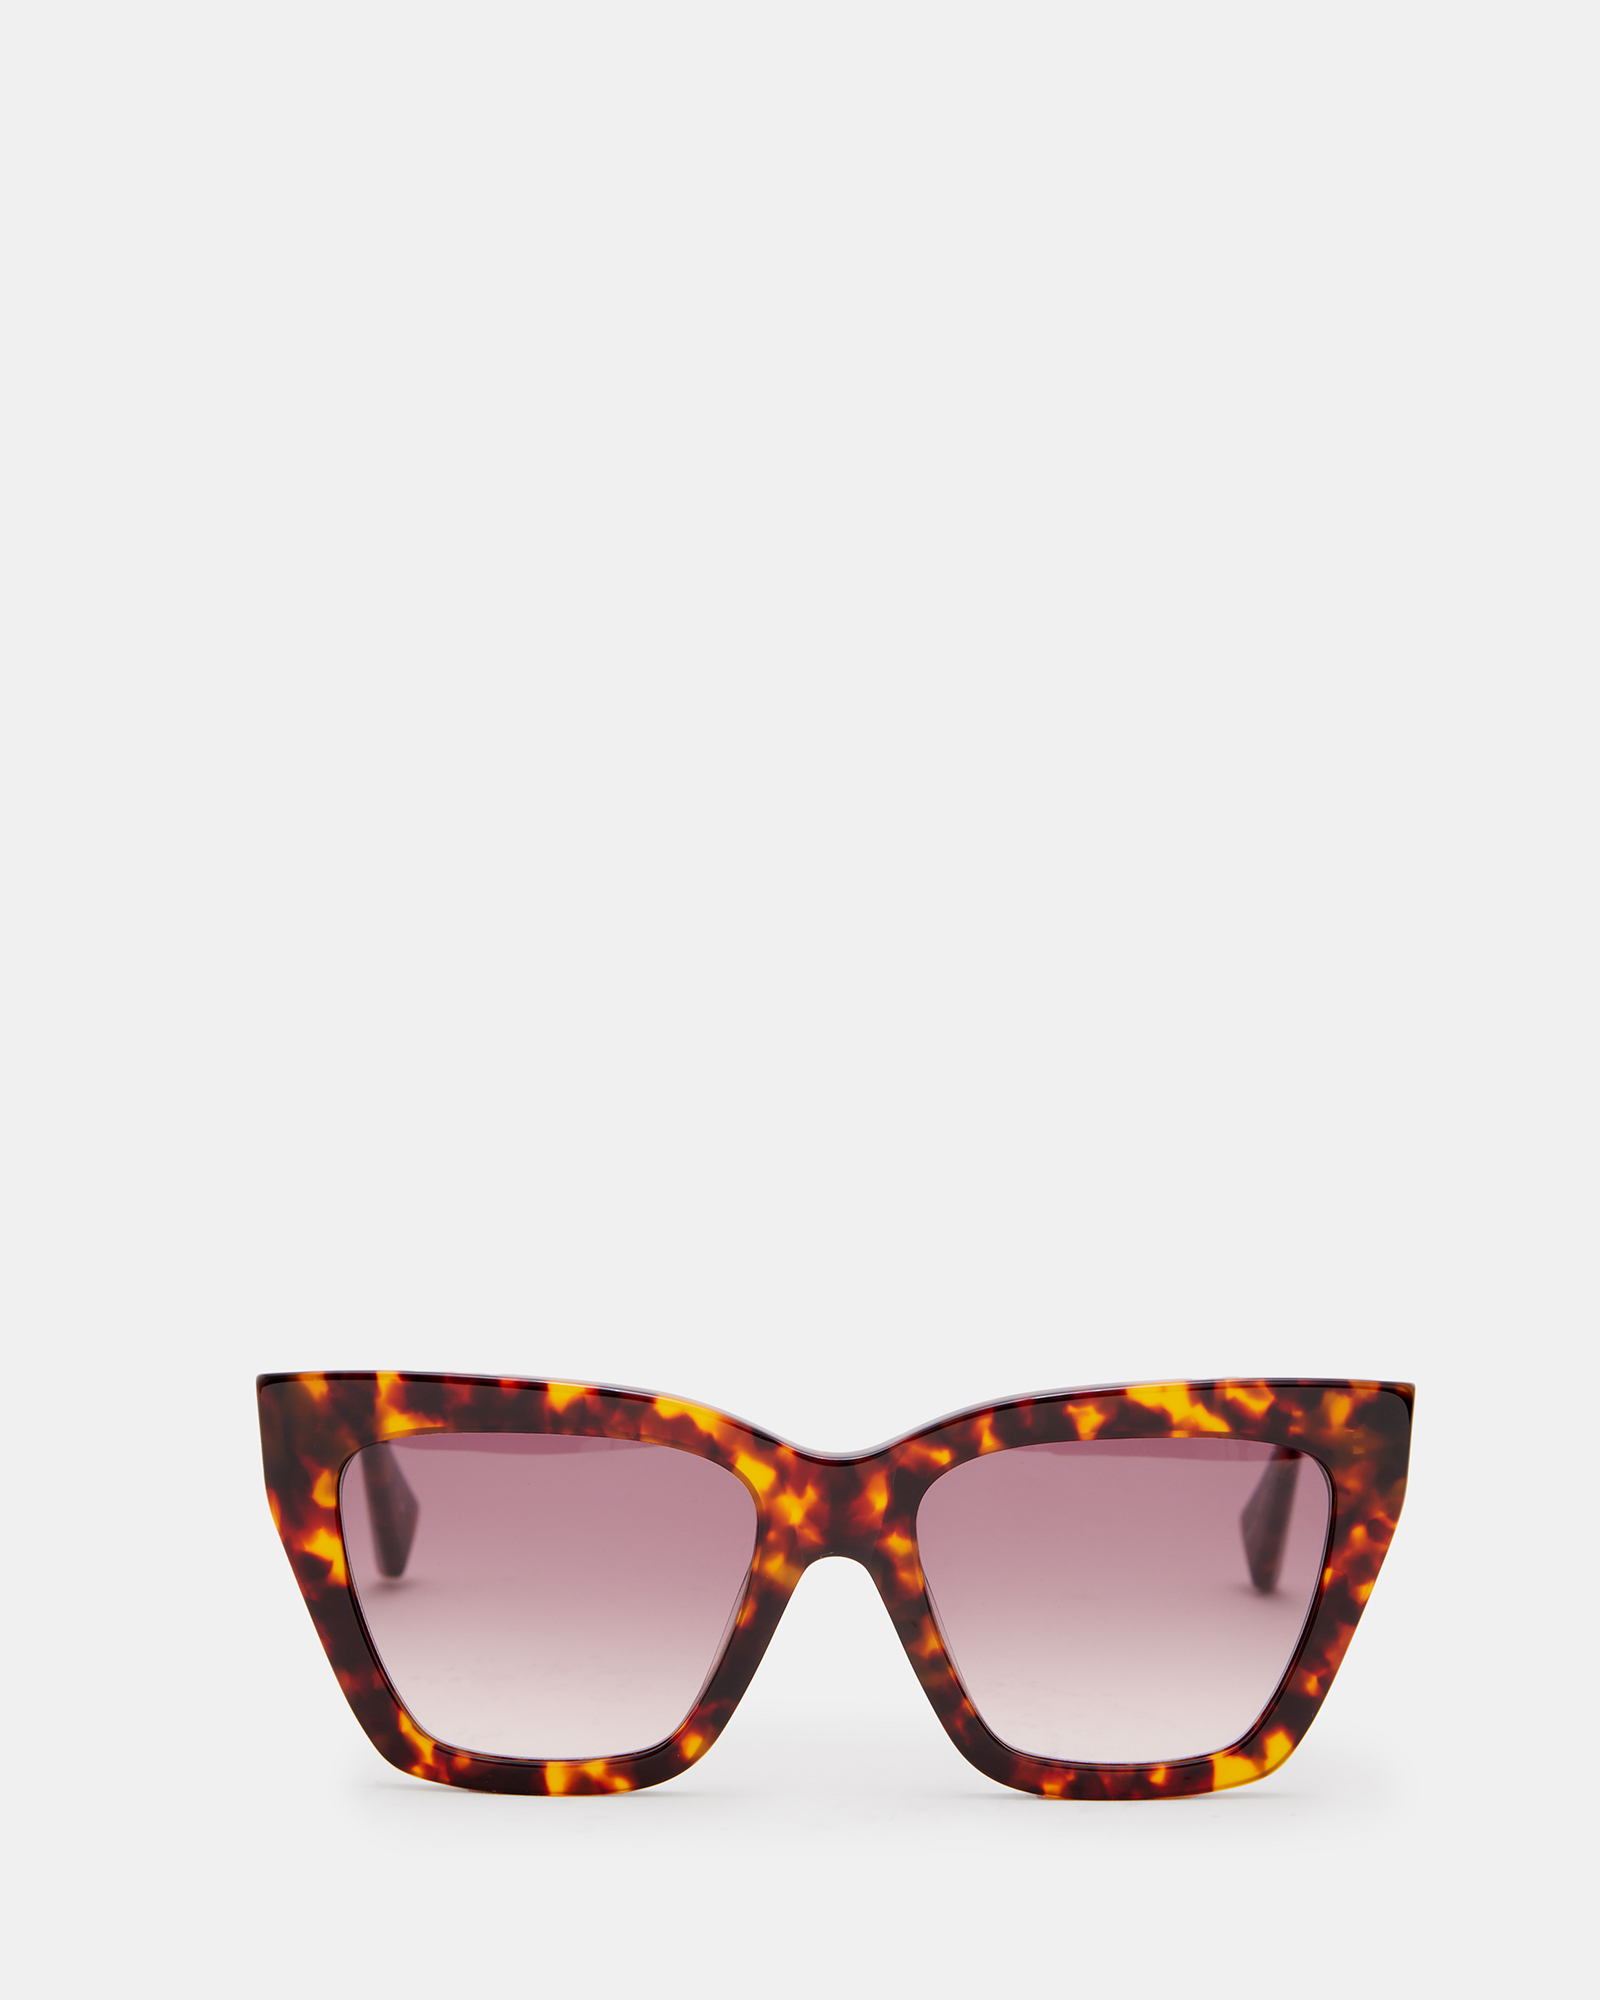 AllSaints Minerva Square Cat Eye Sunglasses,, Brown